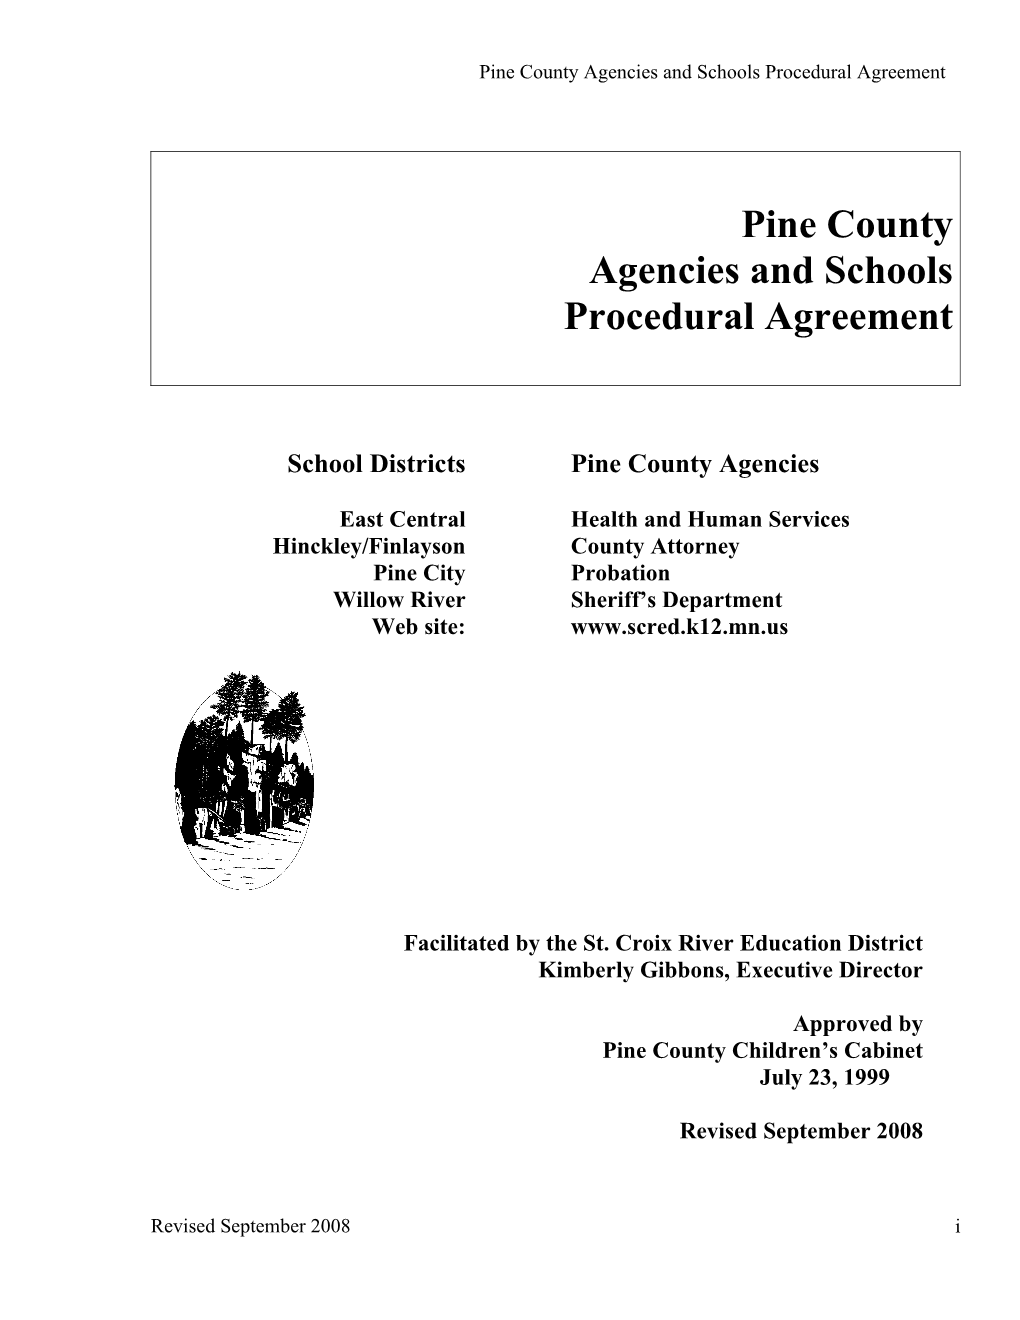 Pine County Agencies and School